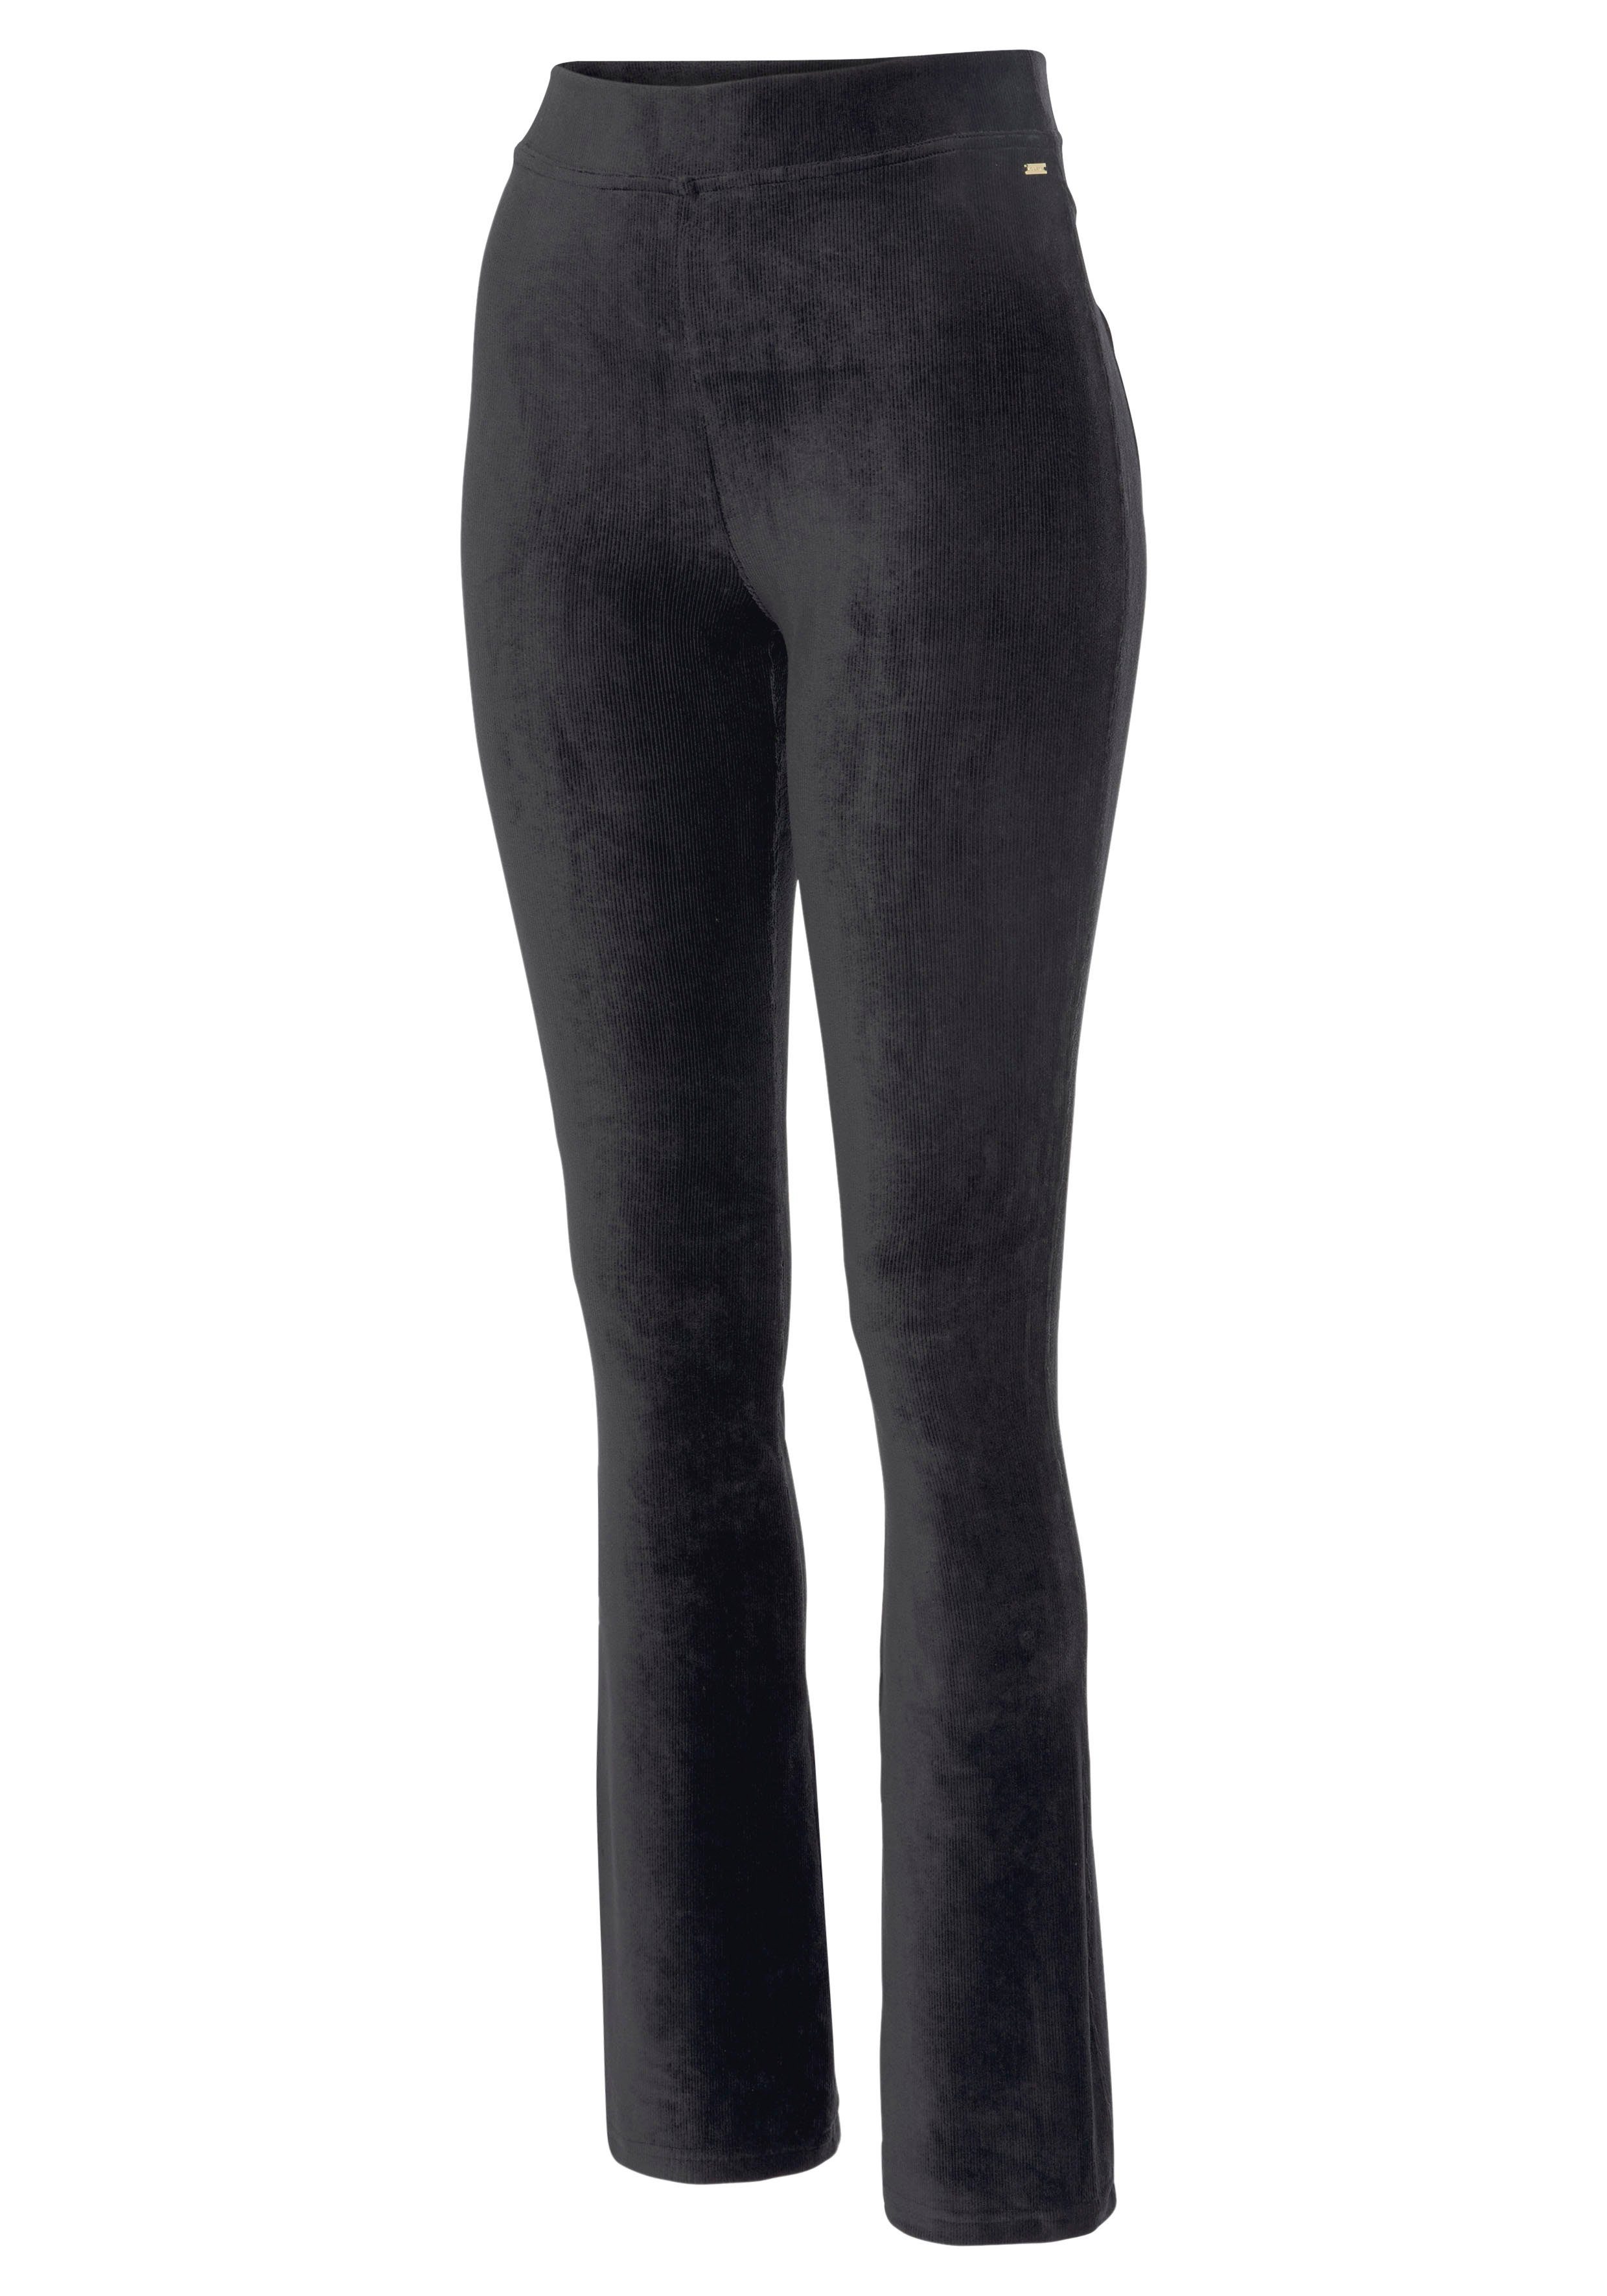 Loungewear Jazzpants in aus Material schwarz weichem LASCANA Cord-Optik,